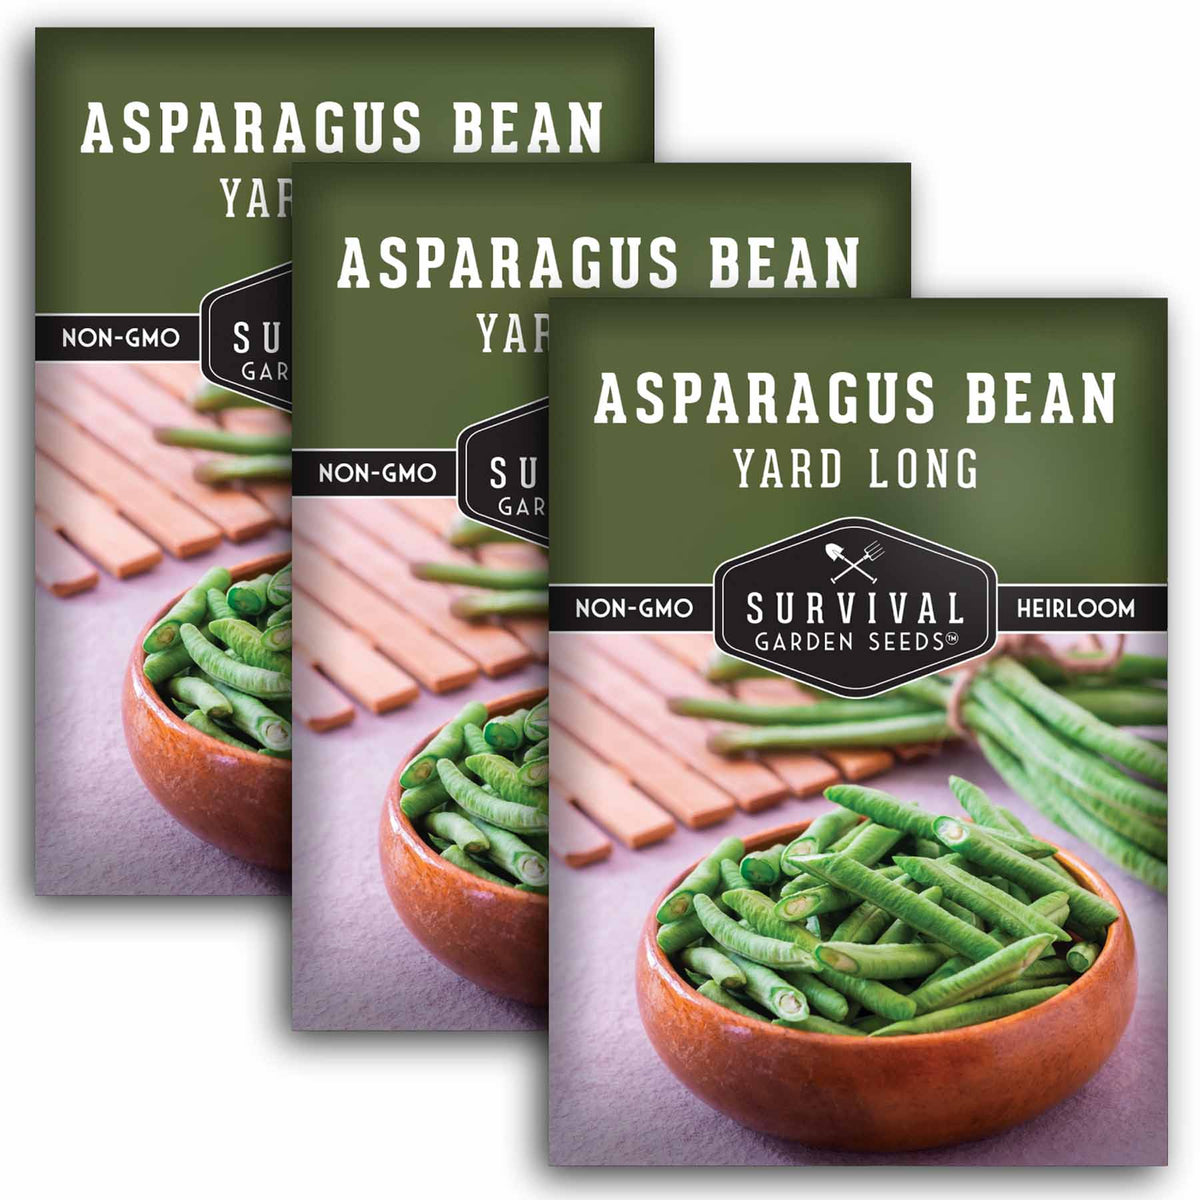 3 packets of Asparagus Bean seeds